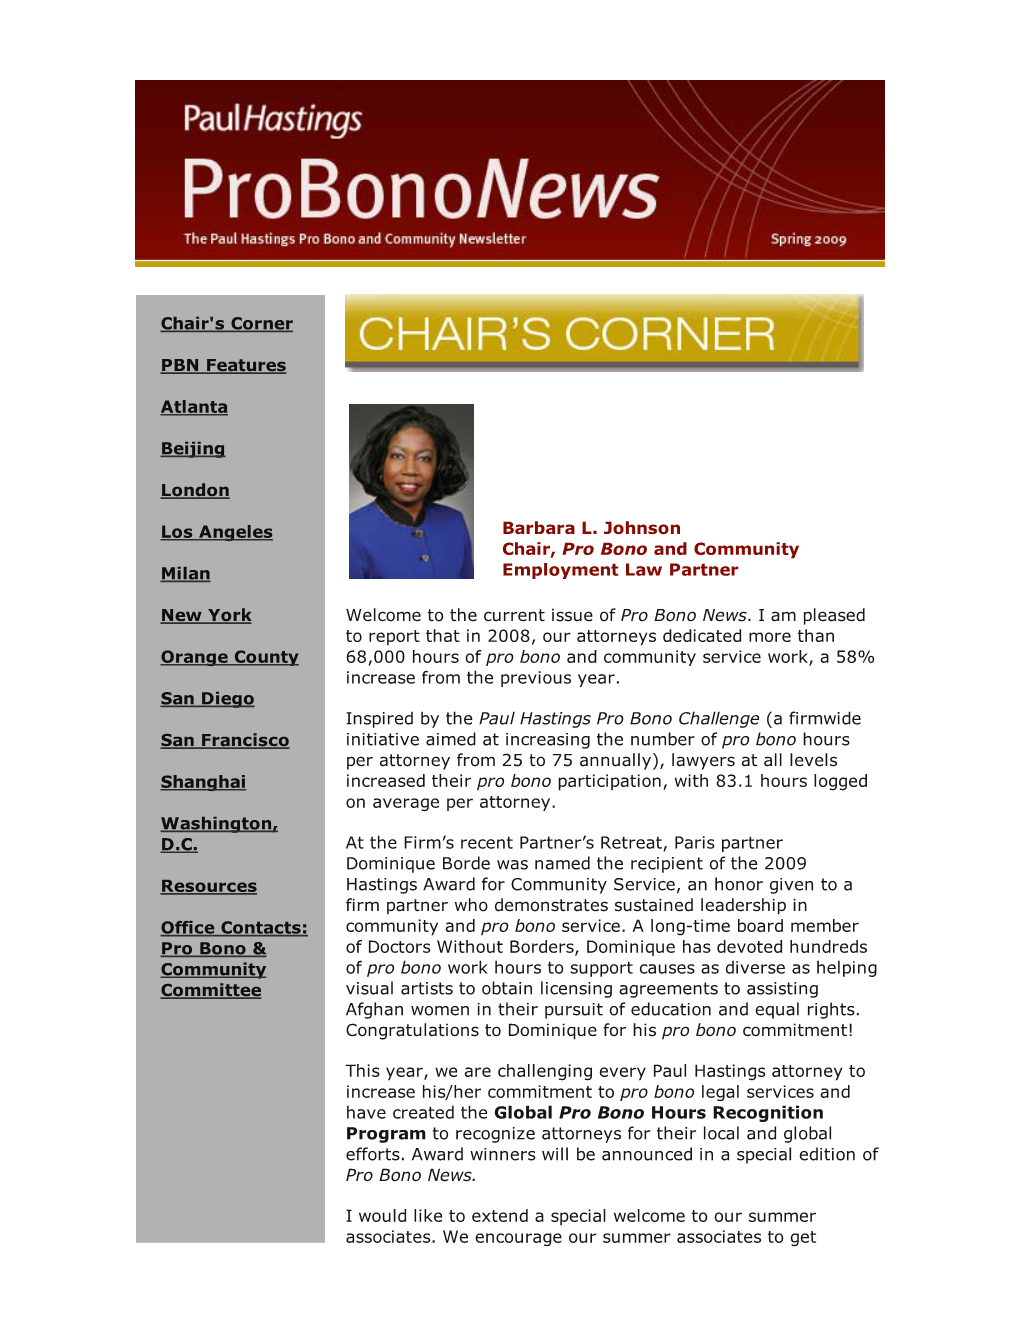 Barbara L. Johnson Chair, Pro Bono and Community Employment Law